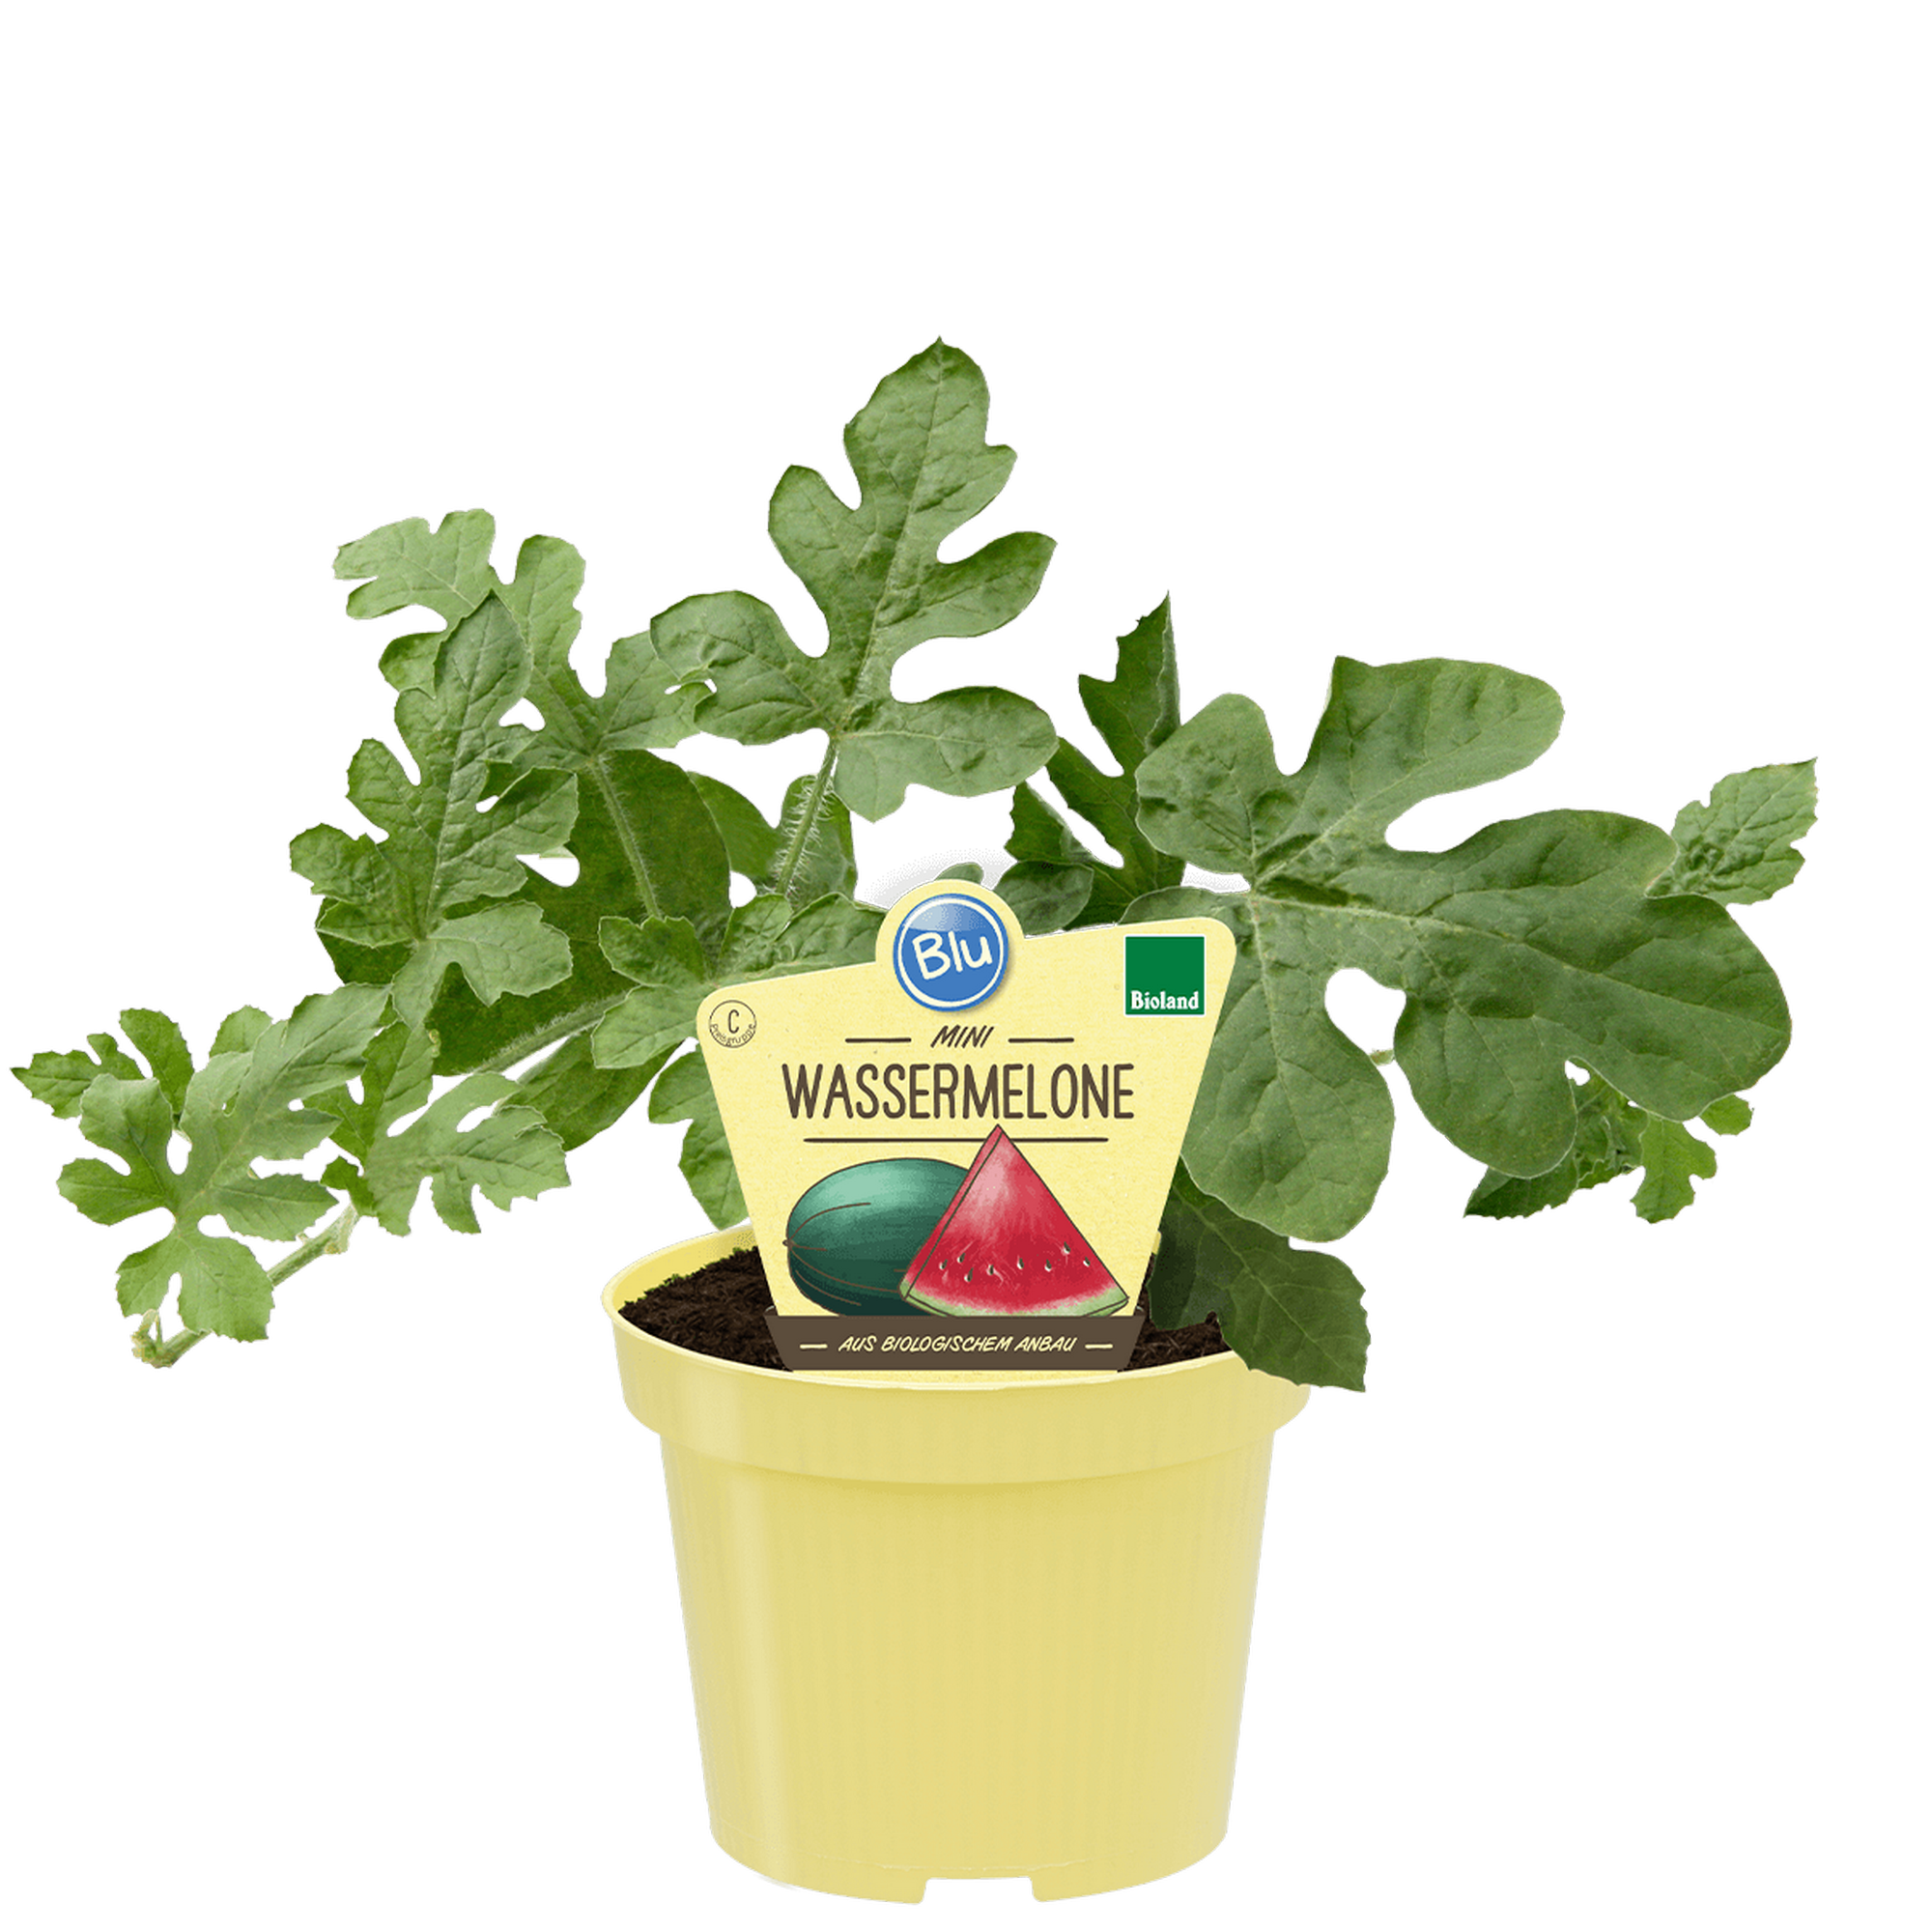 Bio-Wassermelone 'Little Darling' 12 cm Topf + product picture